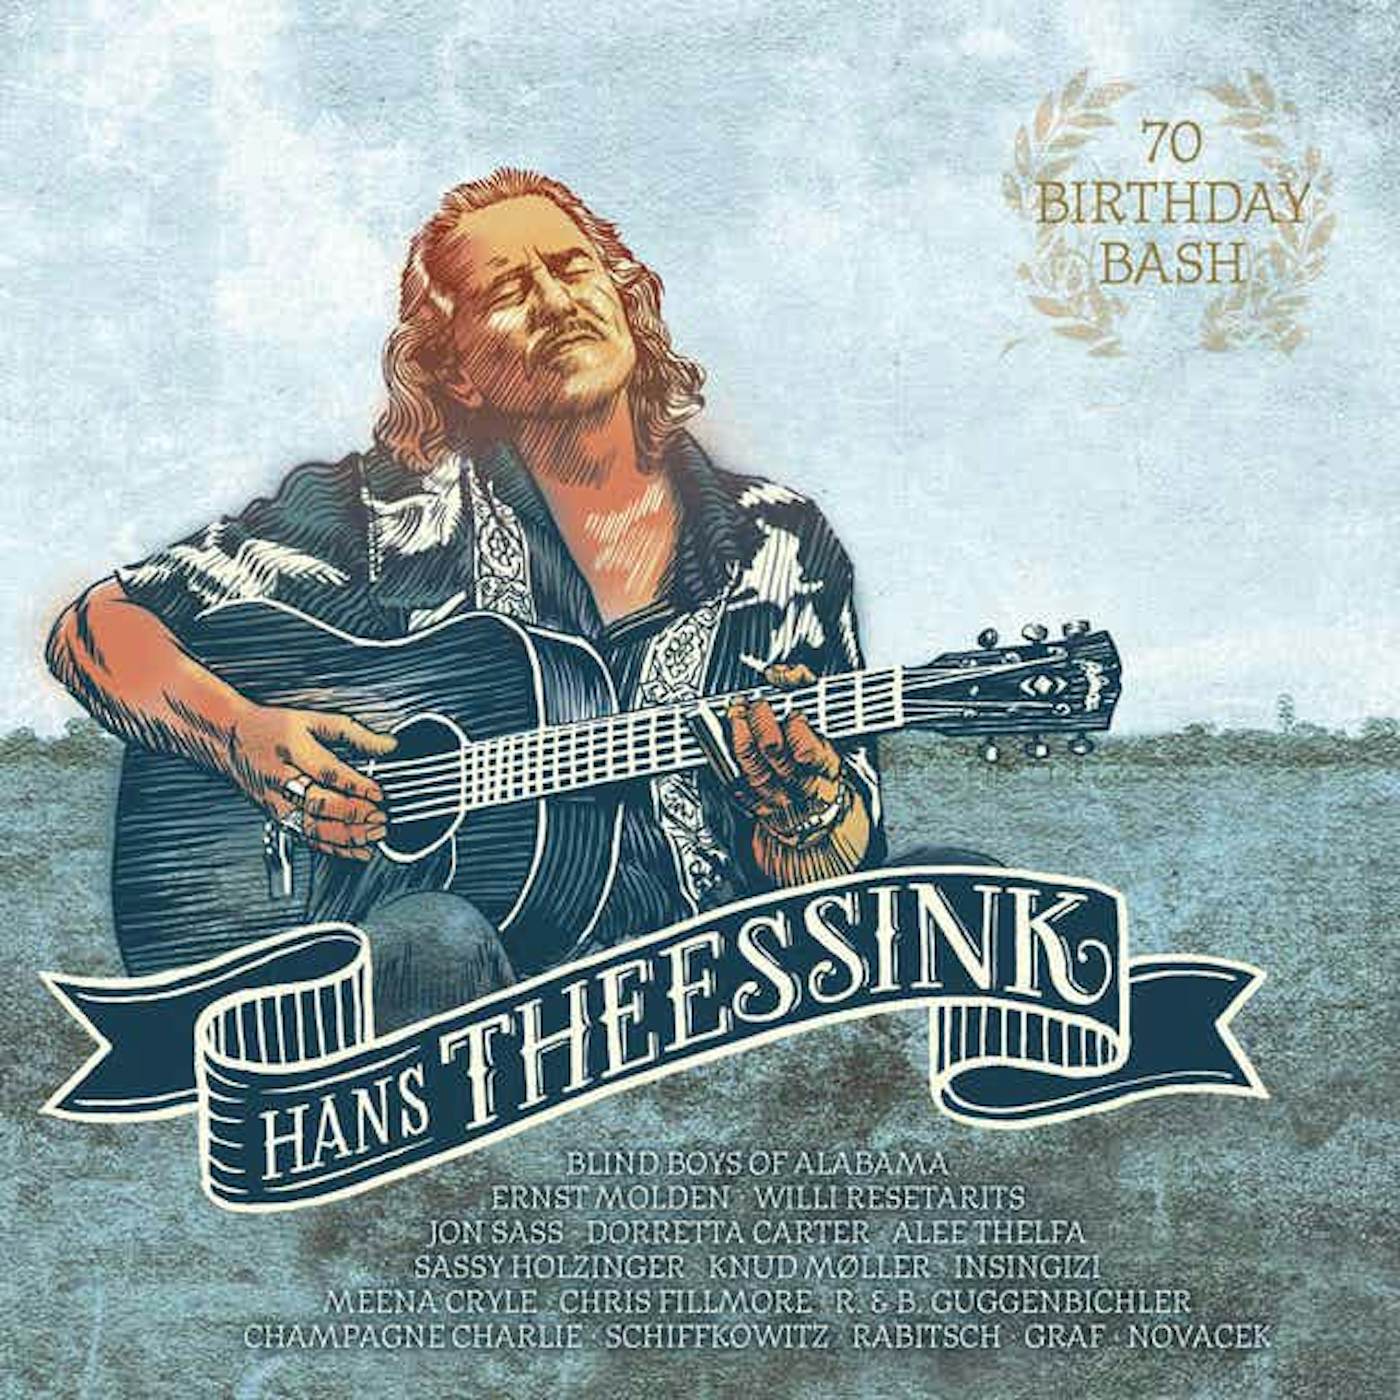 Hans Theessink 70 BIRTHDAY BASH CD